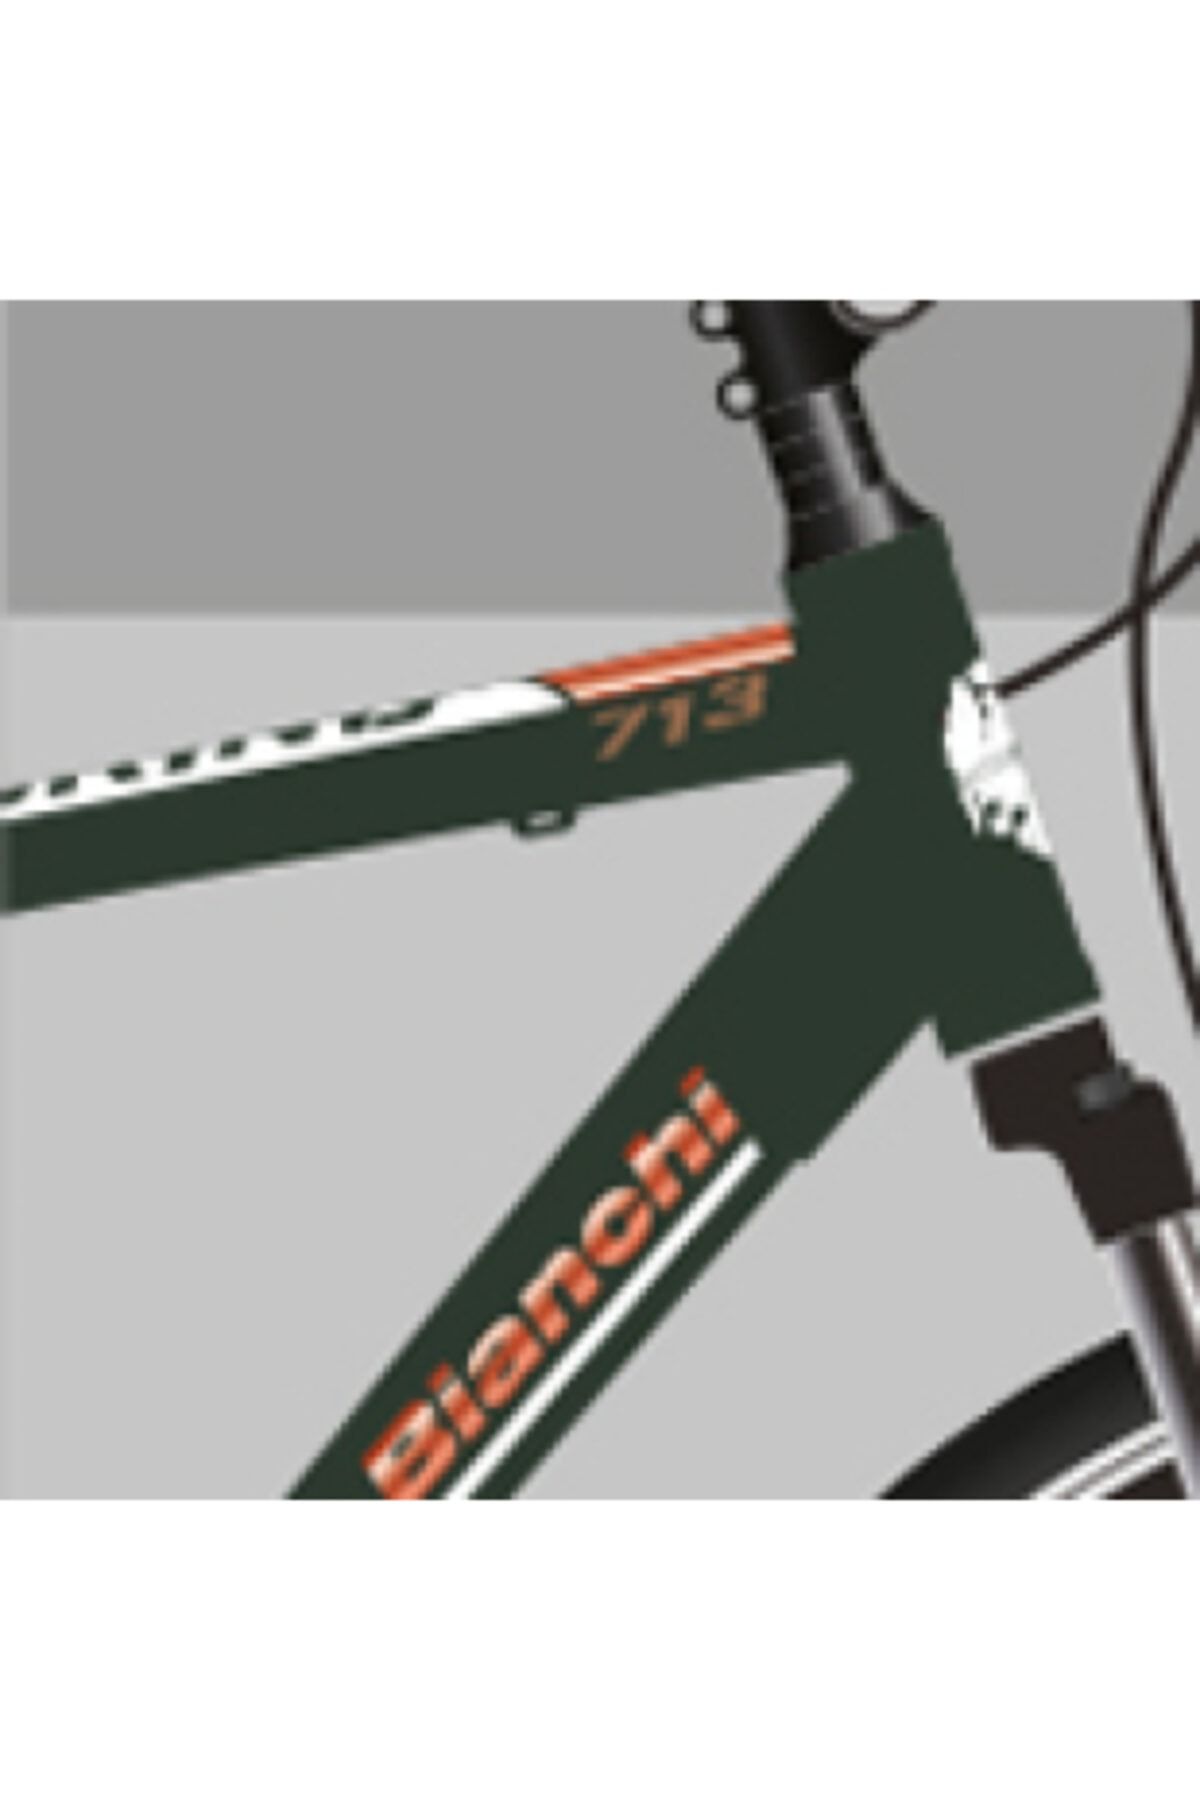 Bianchi Tourıng 713 Erkek Şehir Bisikleti 510h Hd 28 Jant 24 Vites Metalik Koyu Yeşil Beyaz Bakır